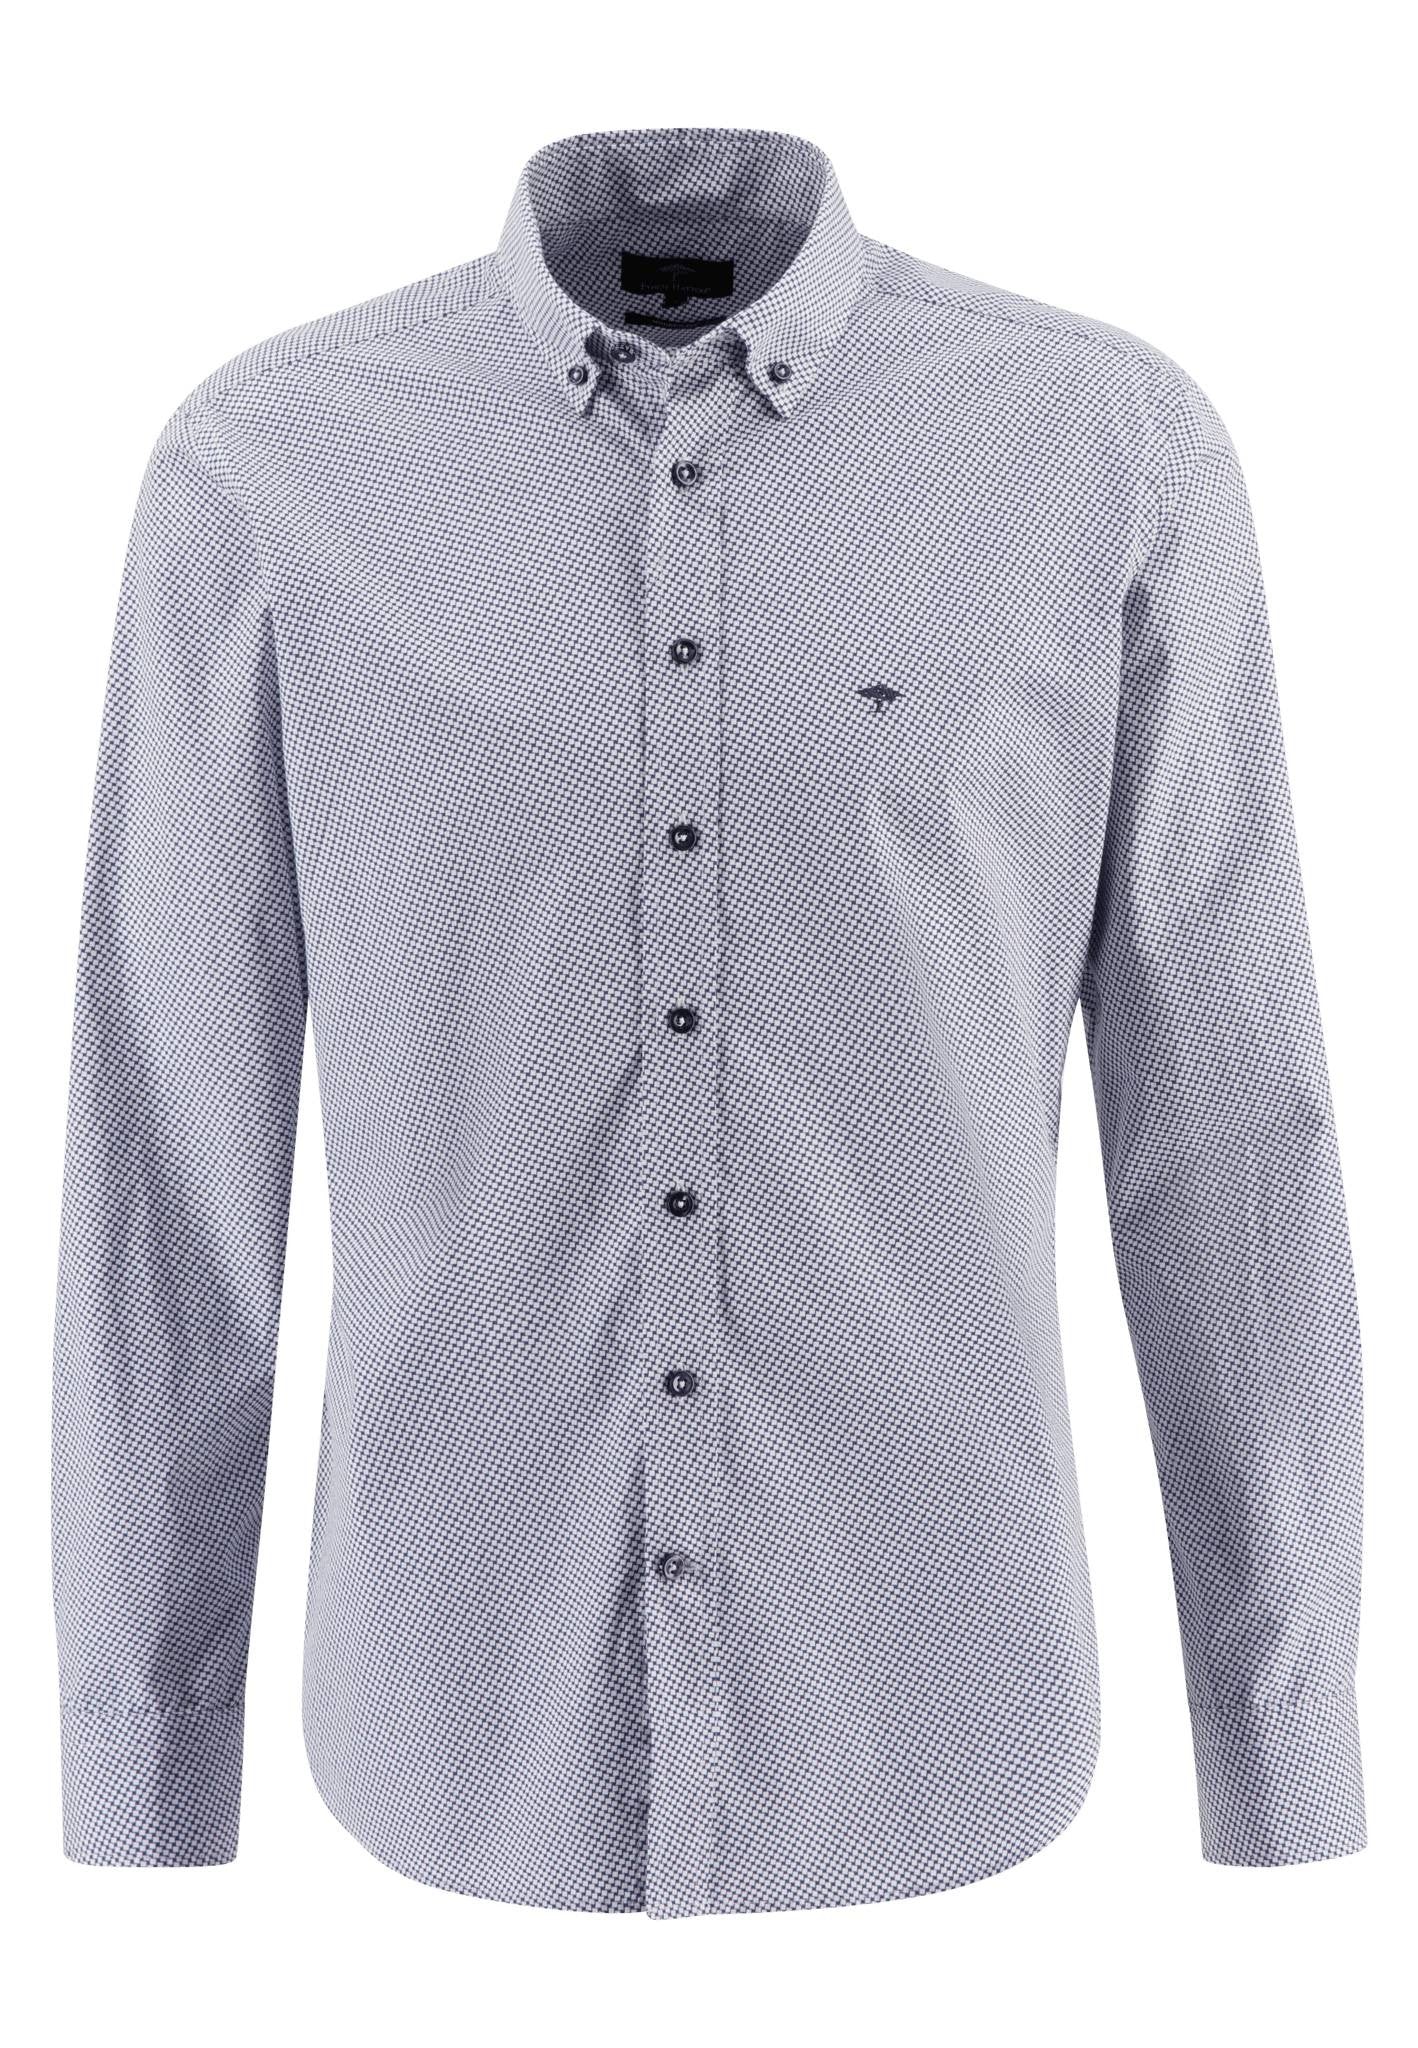 Fynch Hatton Modern Fit Shirt Navy Neat Print Midnight